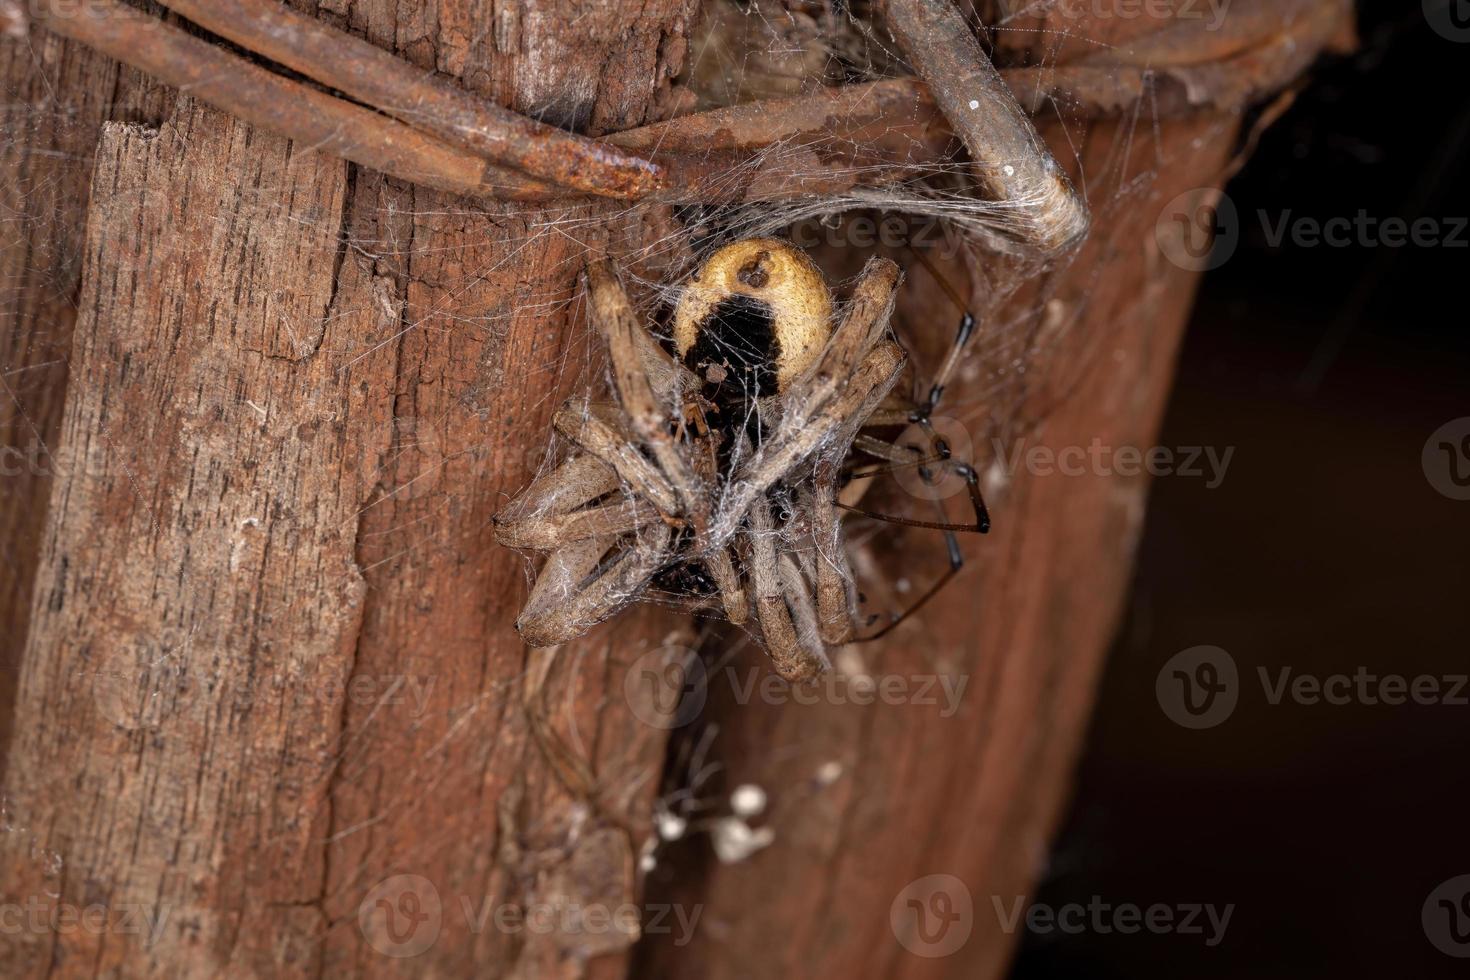 aranha lobo adulta atacada por uma aranha viúva marrom foto